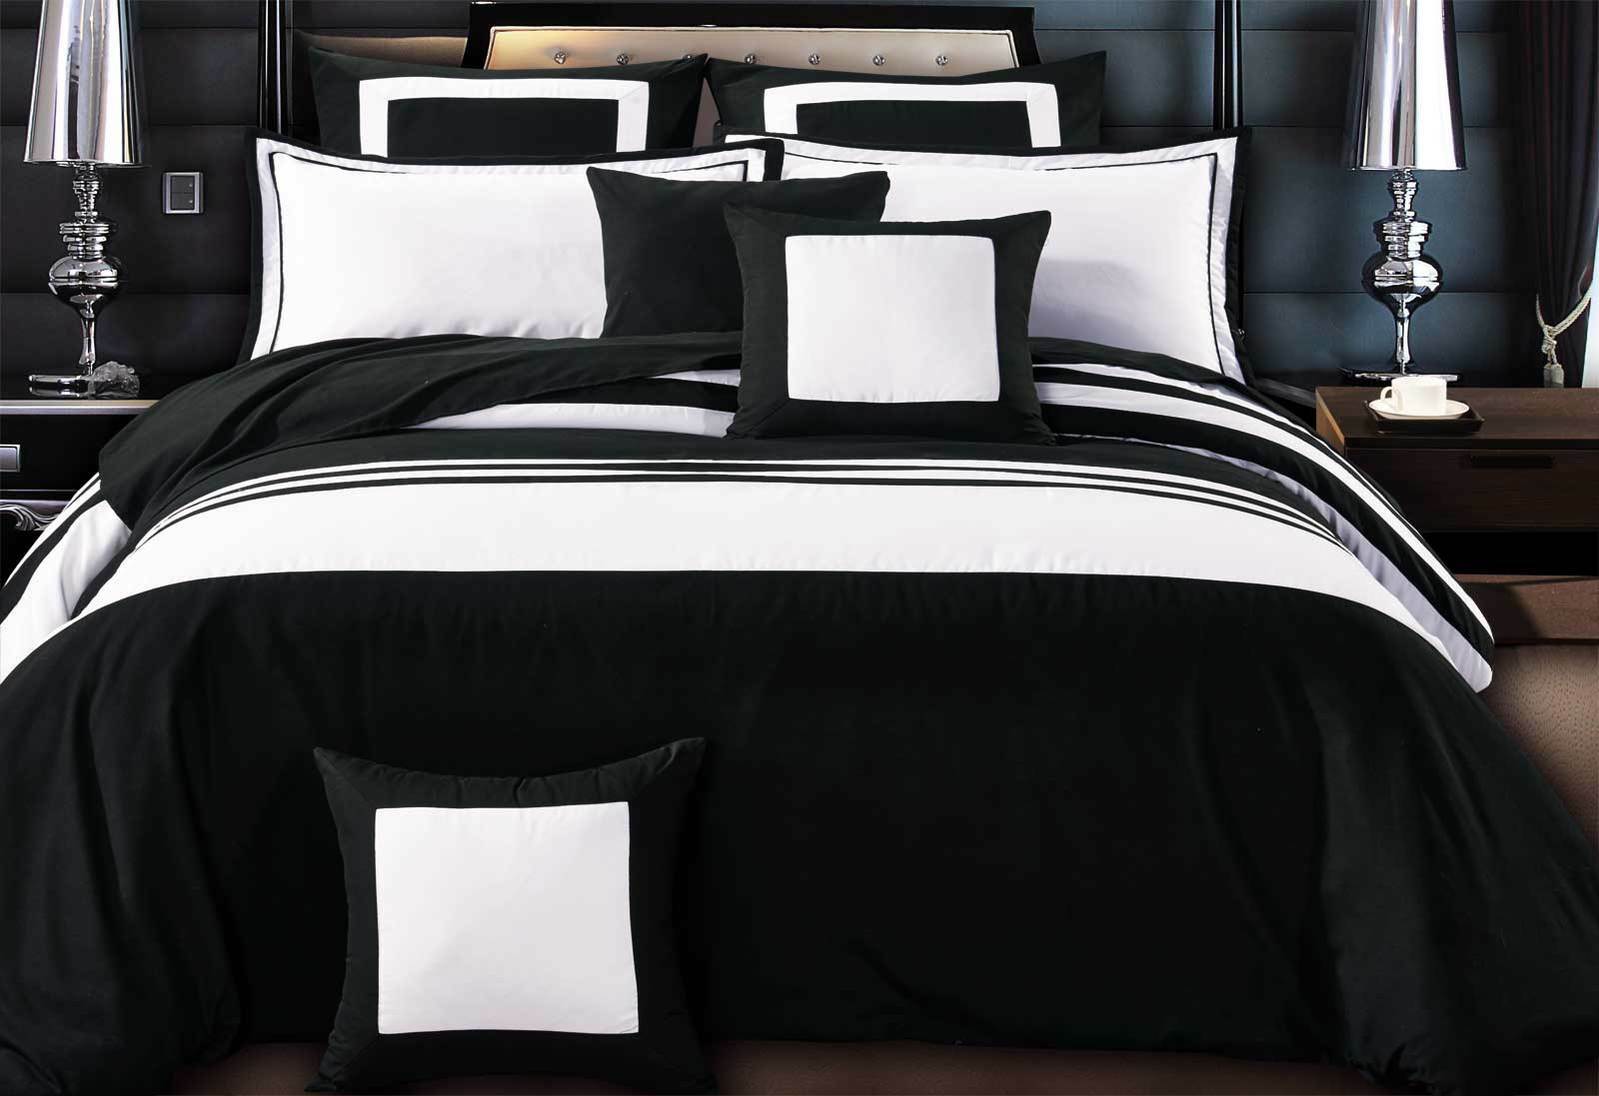 Luxton Rossier Striped Black White, Black And White Duvet Covers King